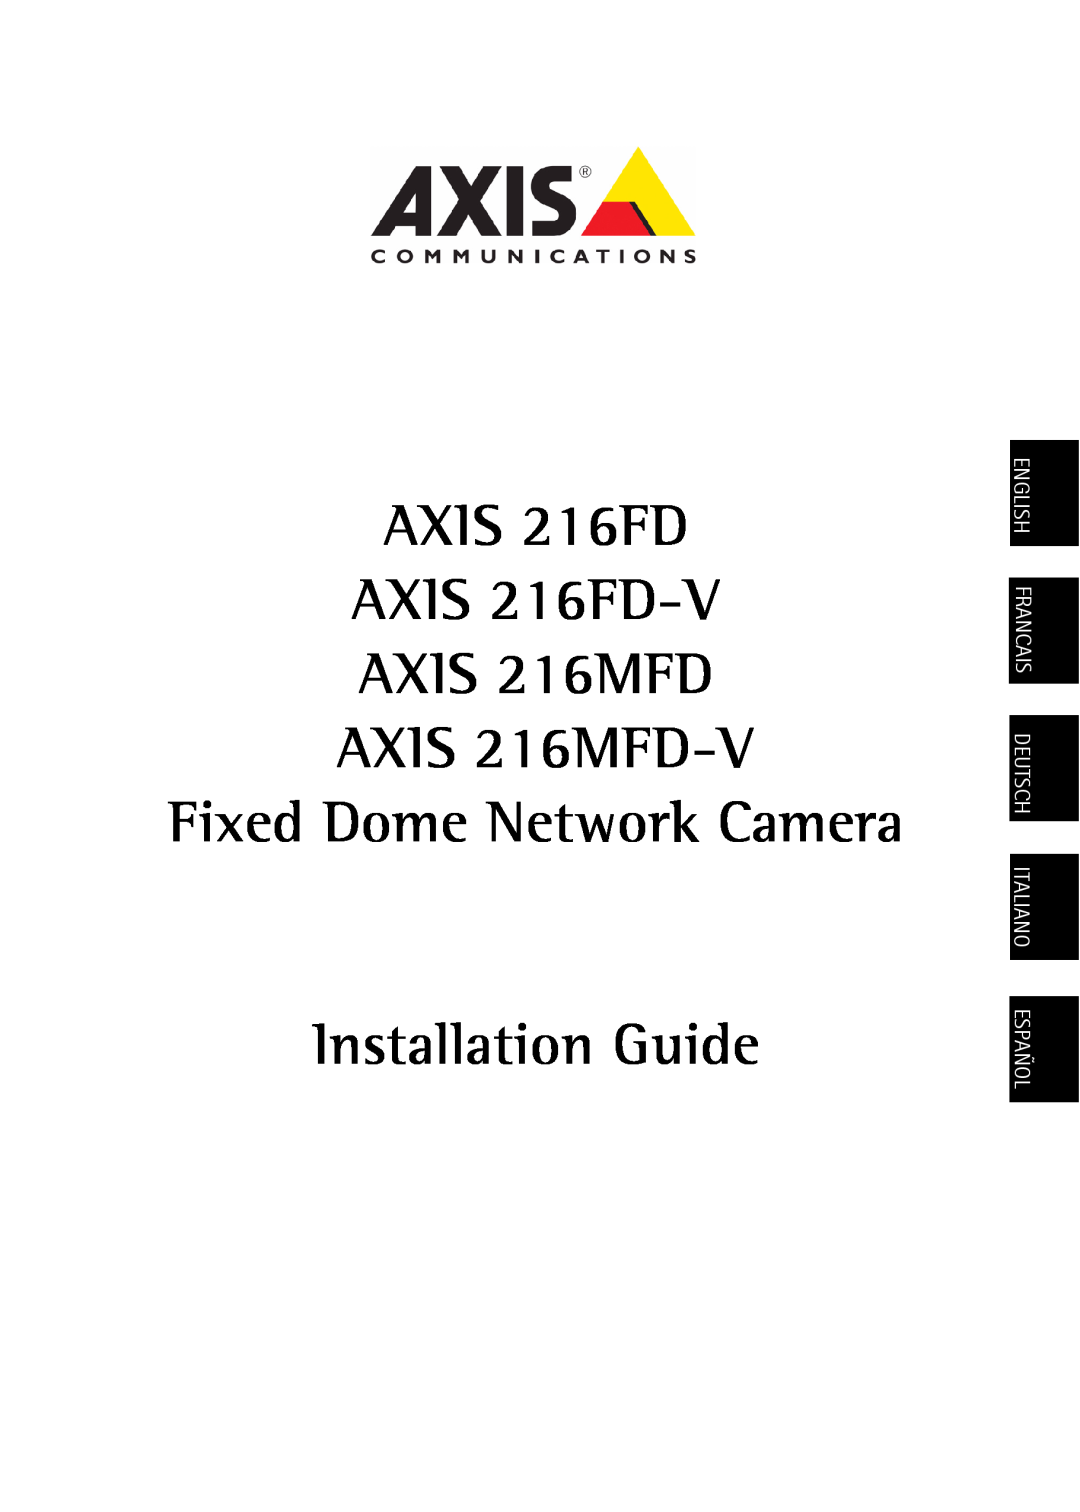 Axis Communications manual AXIS 216FD AXIS 216FD-V AXIS 216MFD AXIS 216MFD-V, English Francais Deutsch Italiano Español 